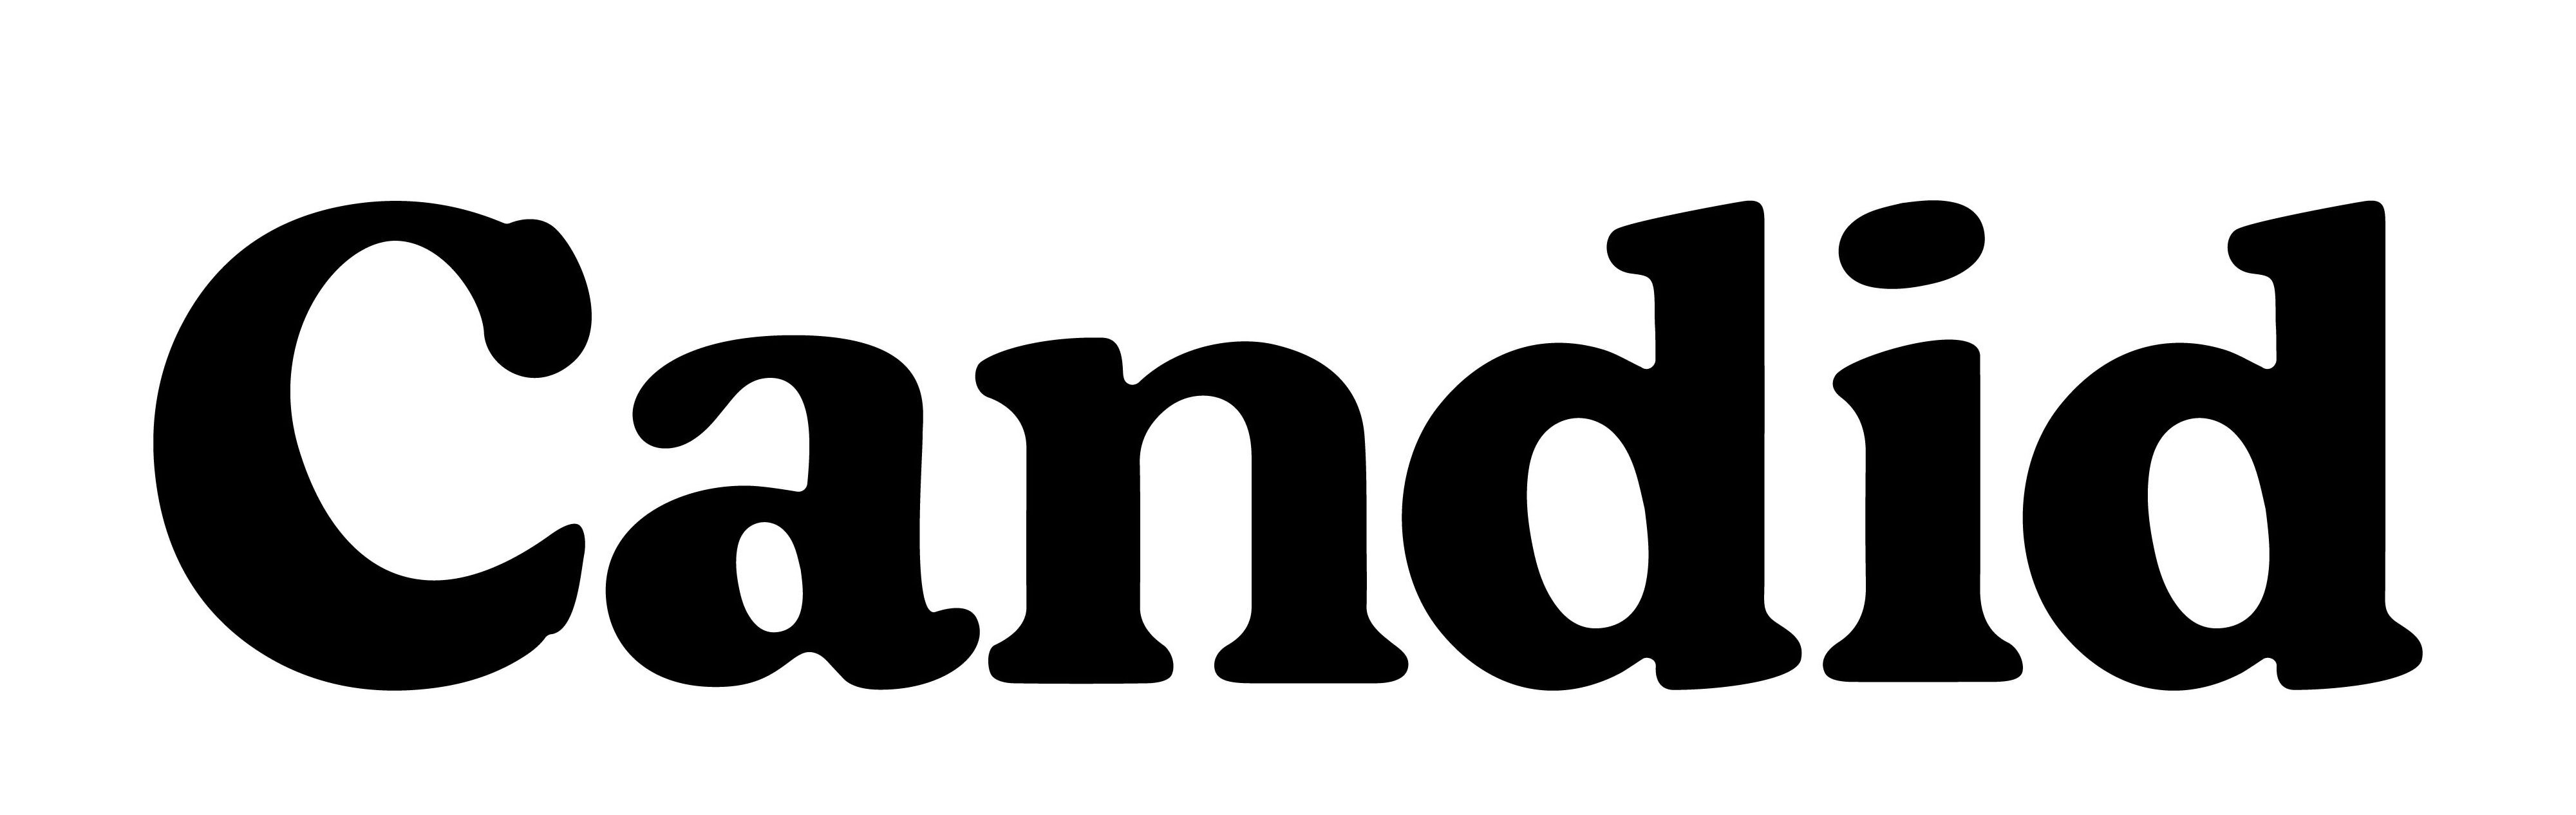 Trademark Logo CANDID